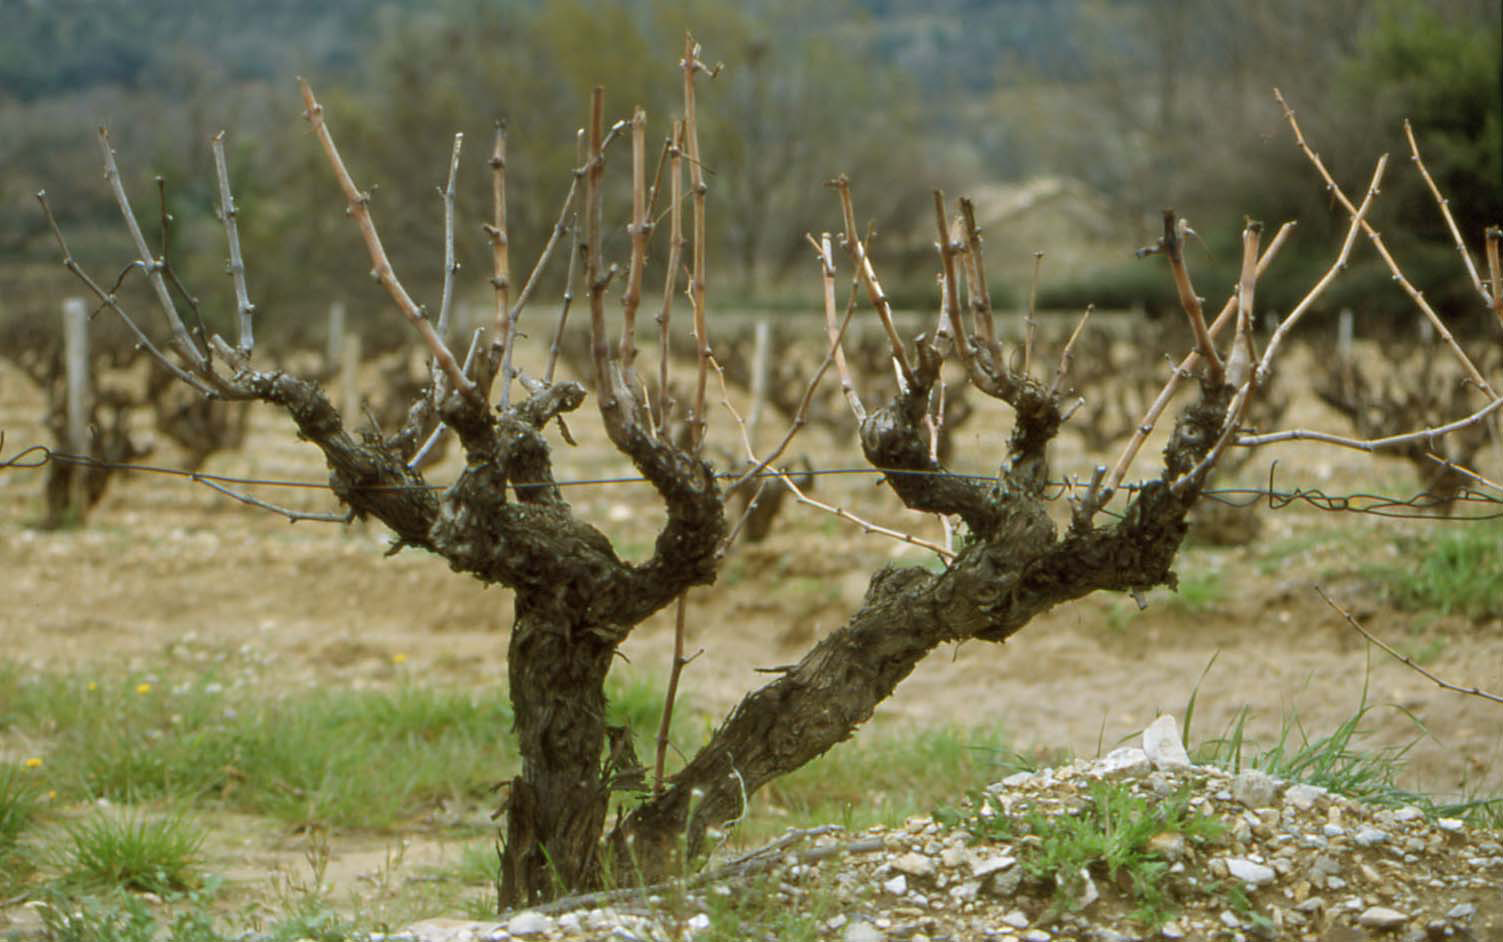 Vines in Lirac